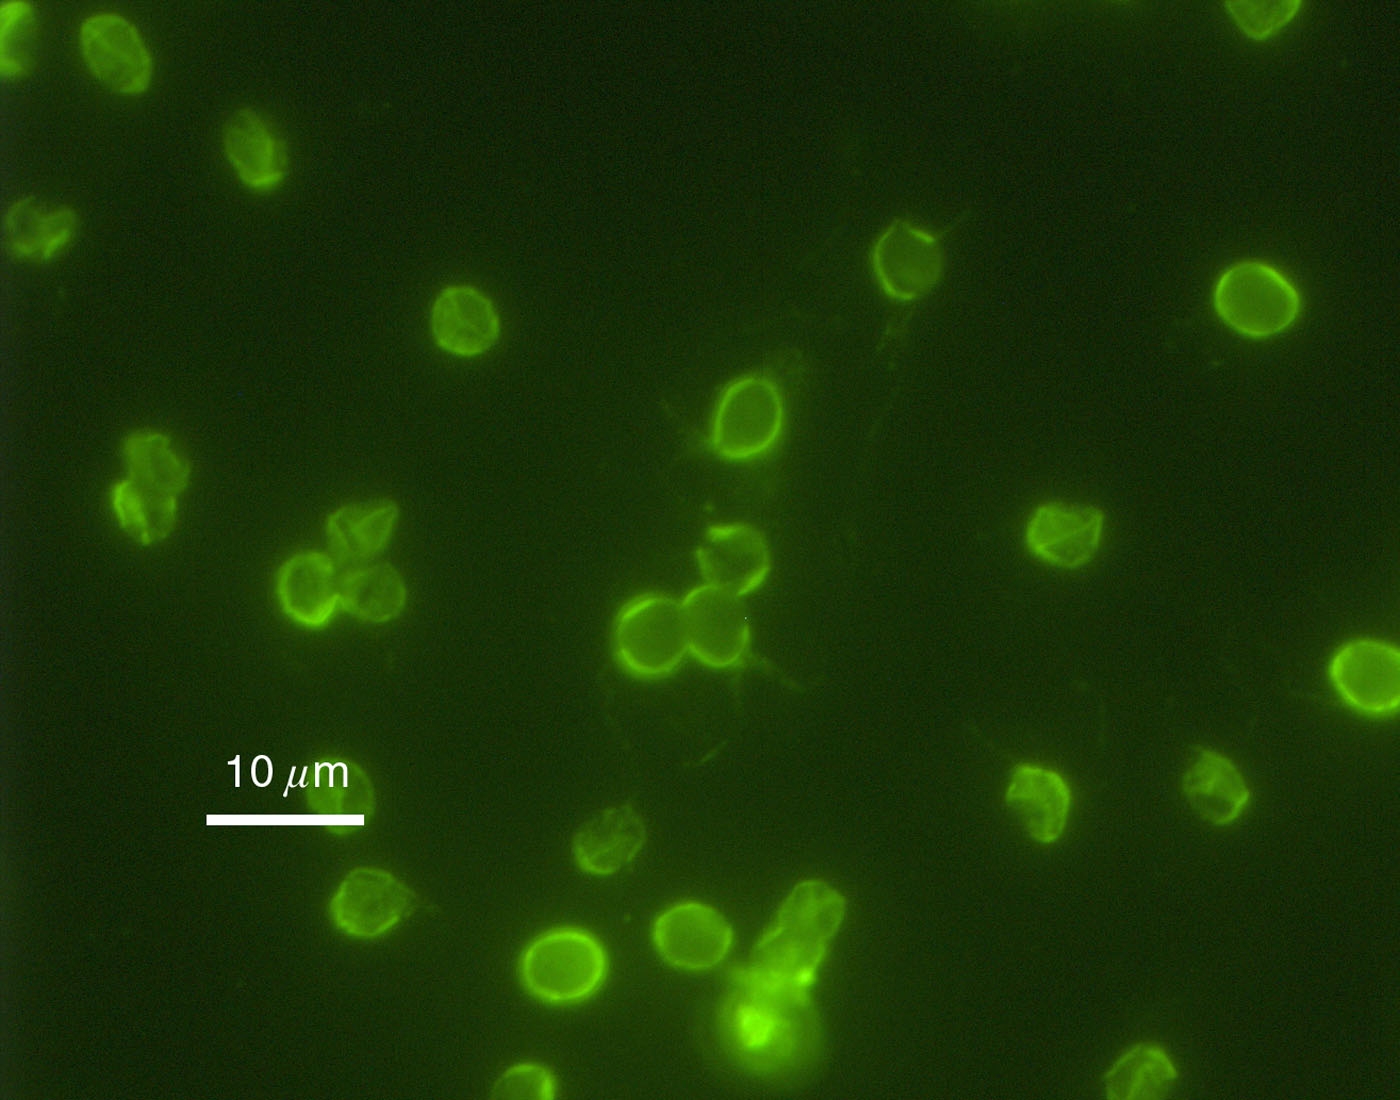 Immunofluorescence image of C. parvum oocysts.